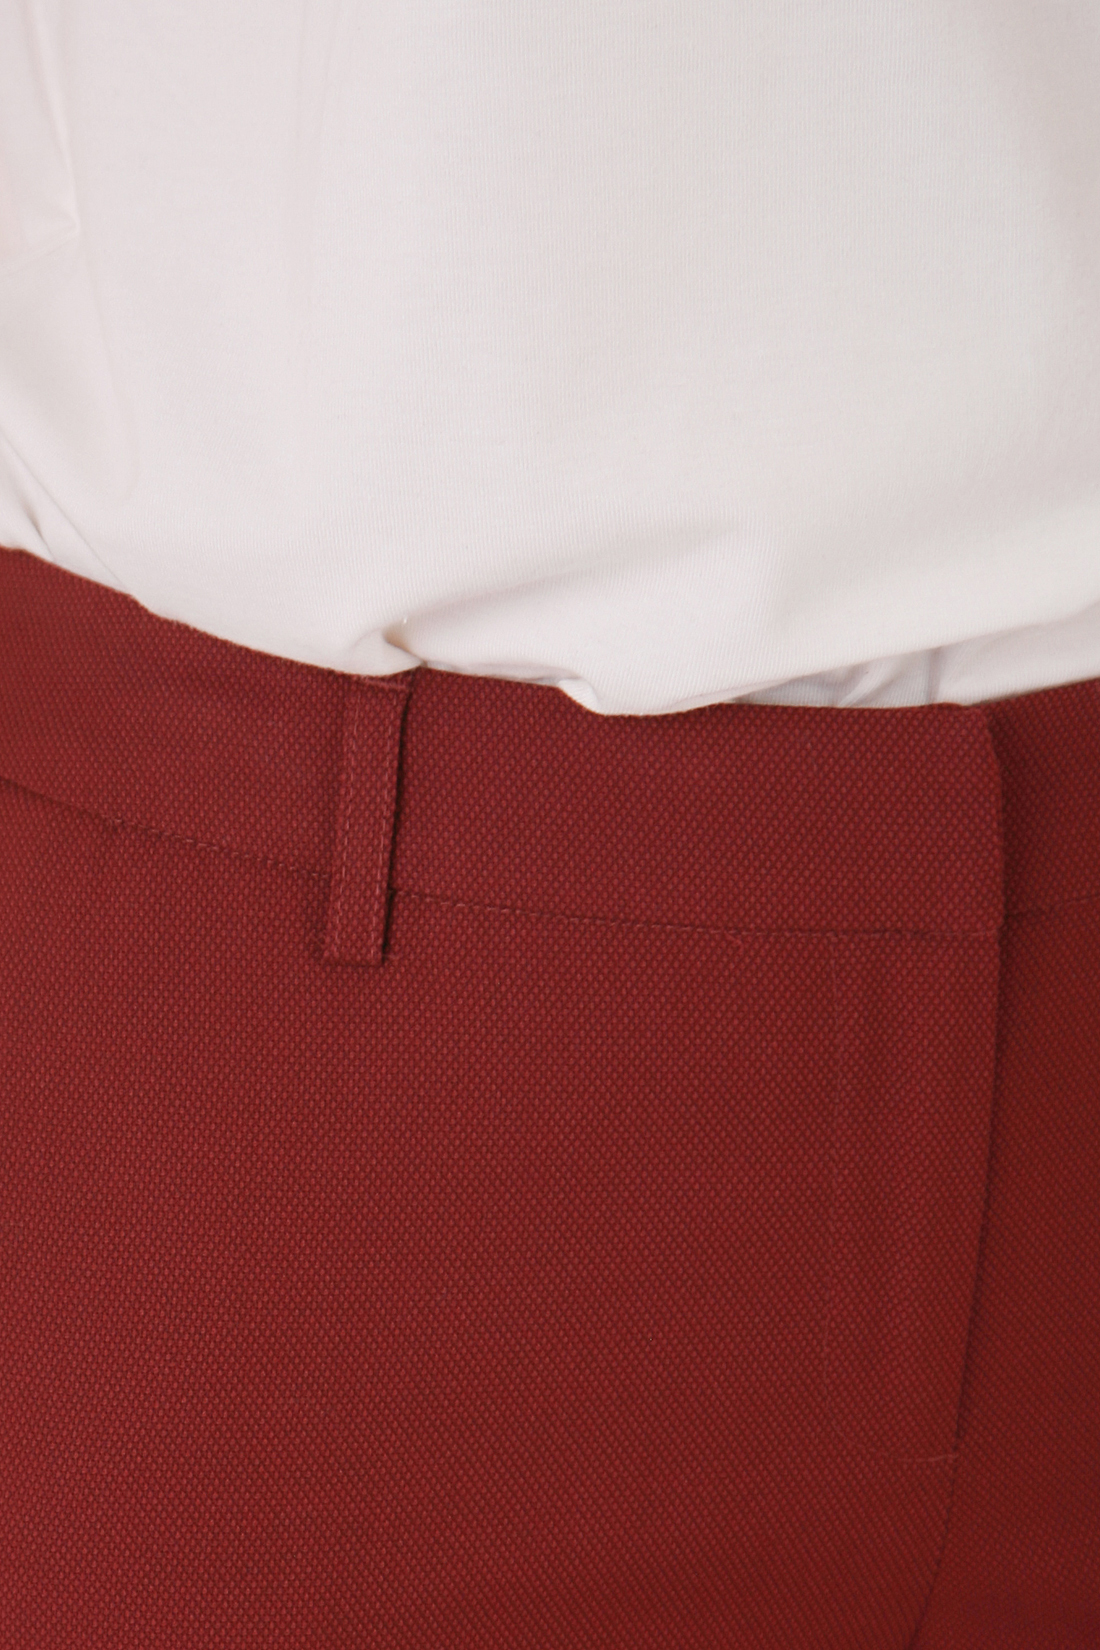 Костюмные брюки-дудочки (арт. baon B298501), размер S, цвет красный Костюмные брюки-дудочки (арт. baon B298501) - фото 3